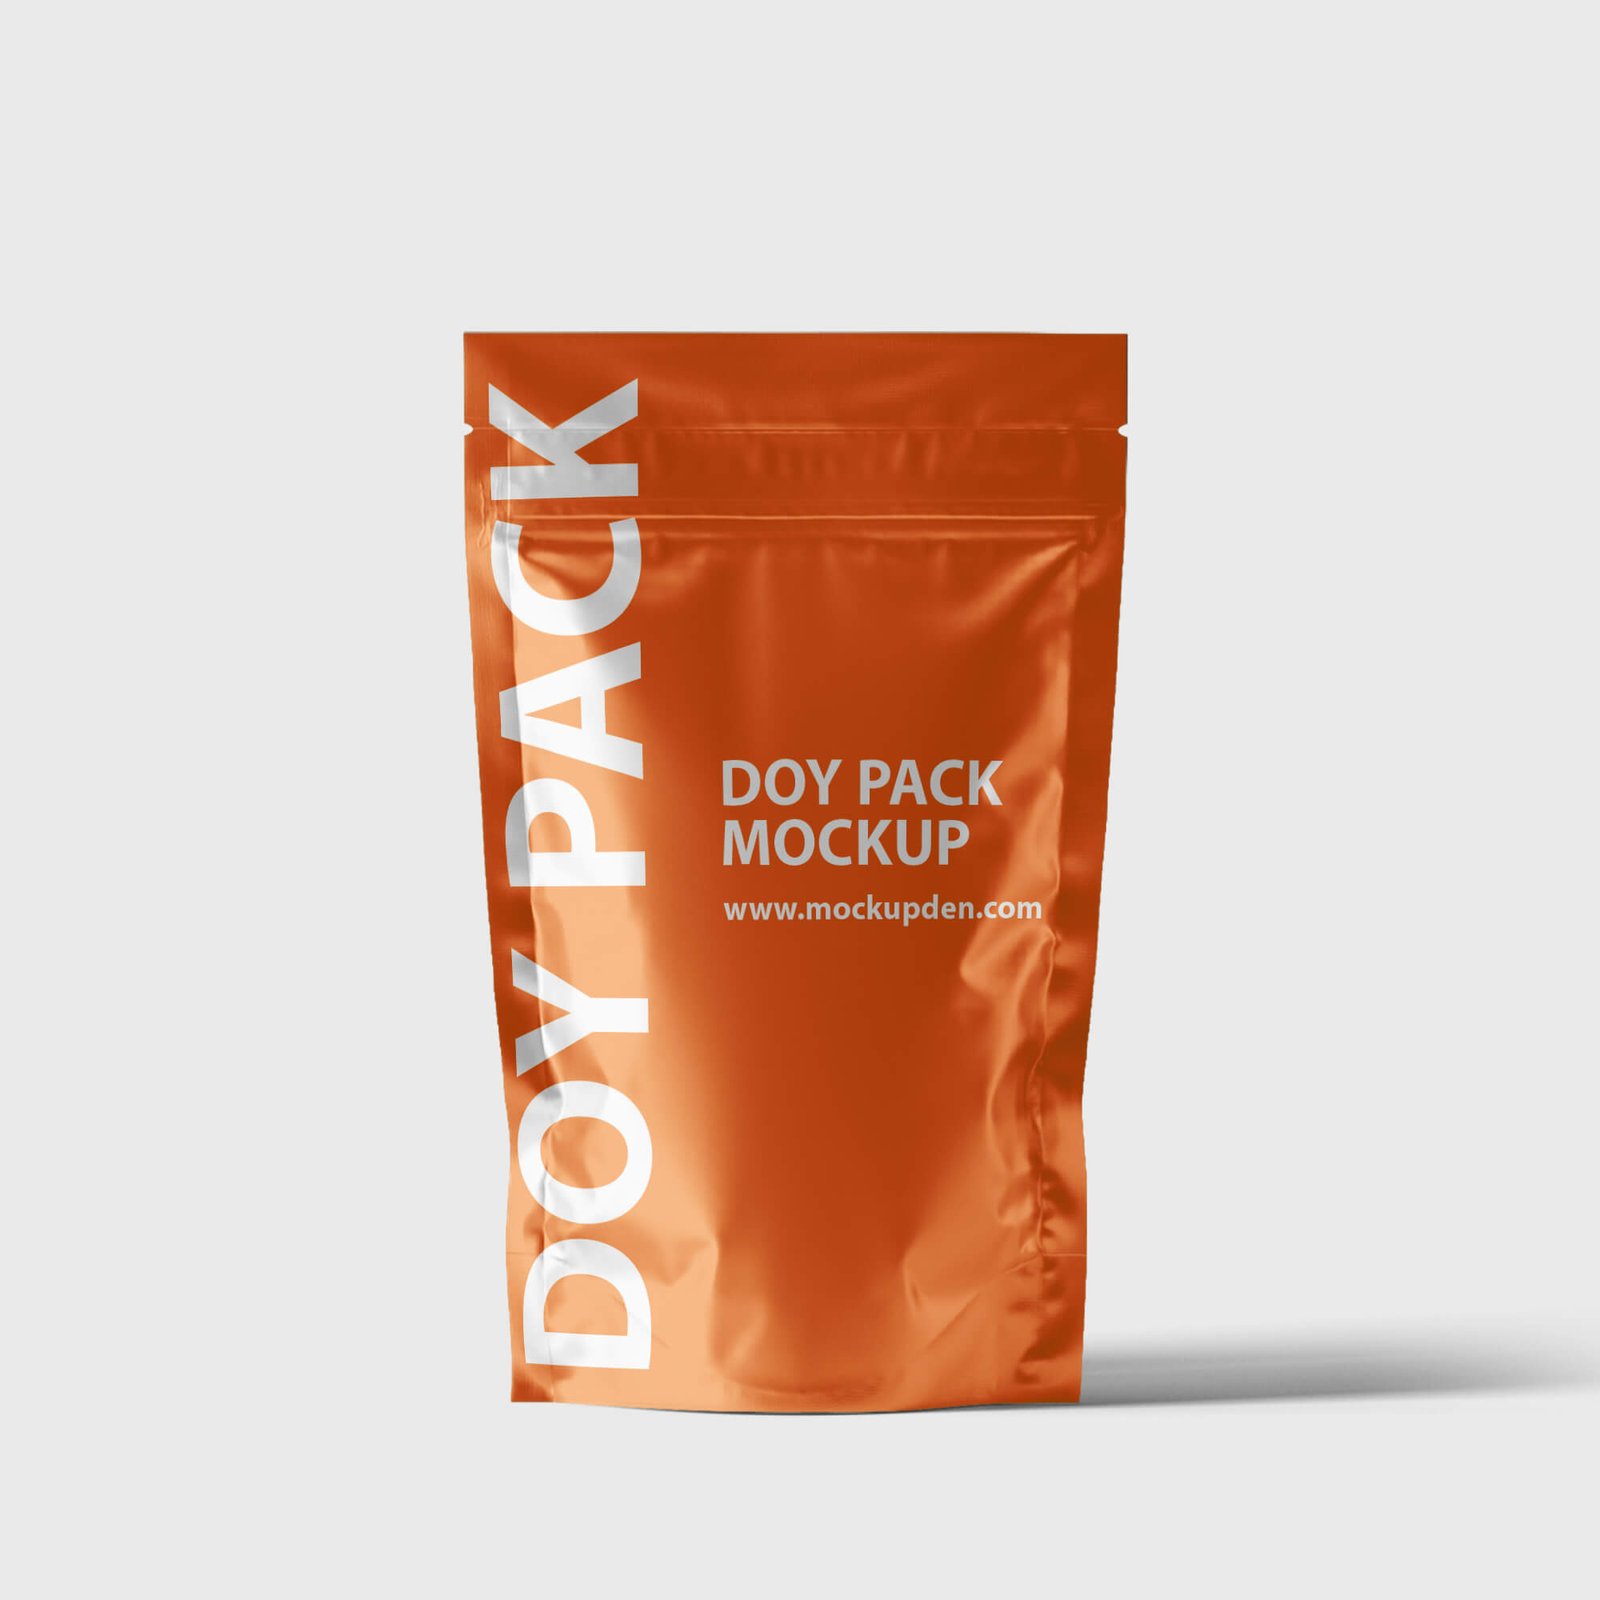 Design Free Doy Pack Mockup PSD Template